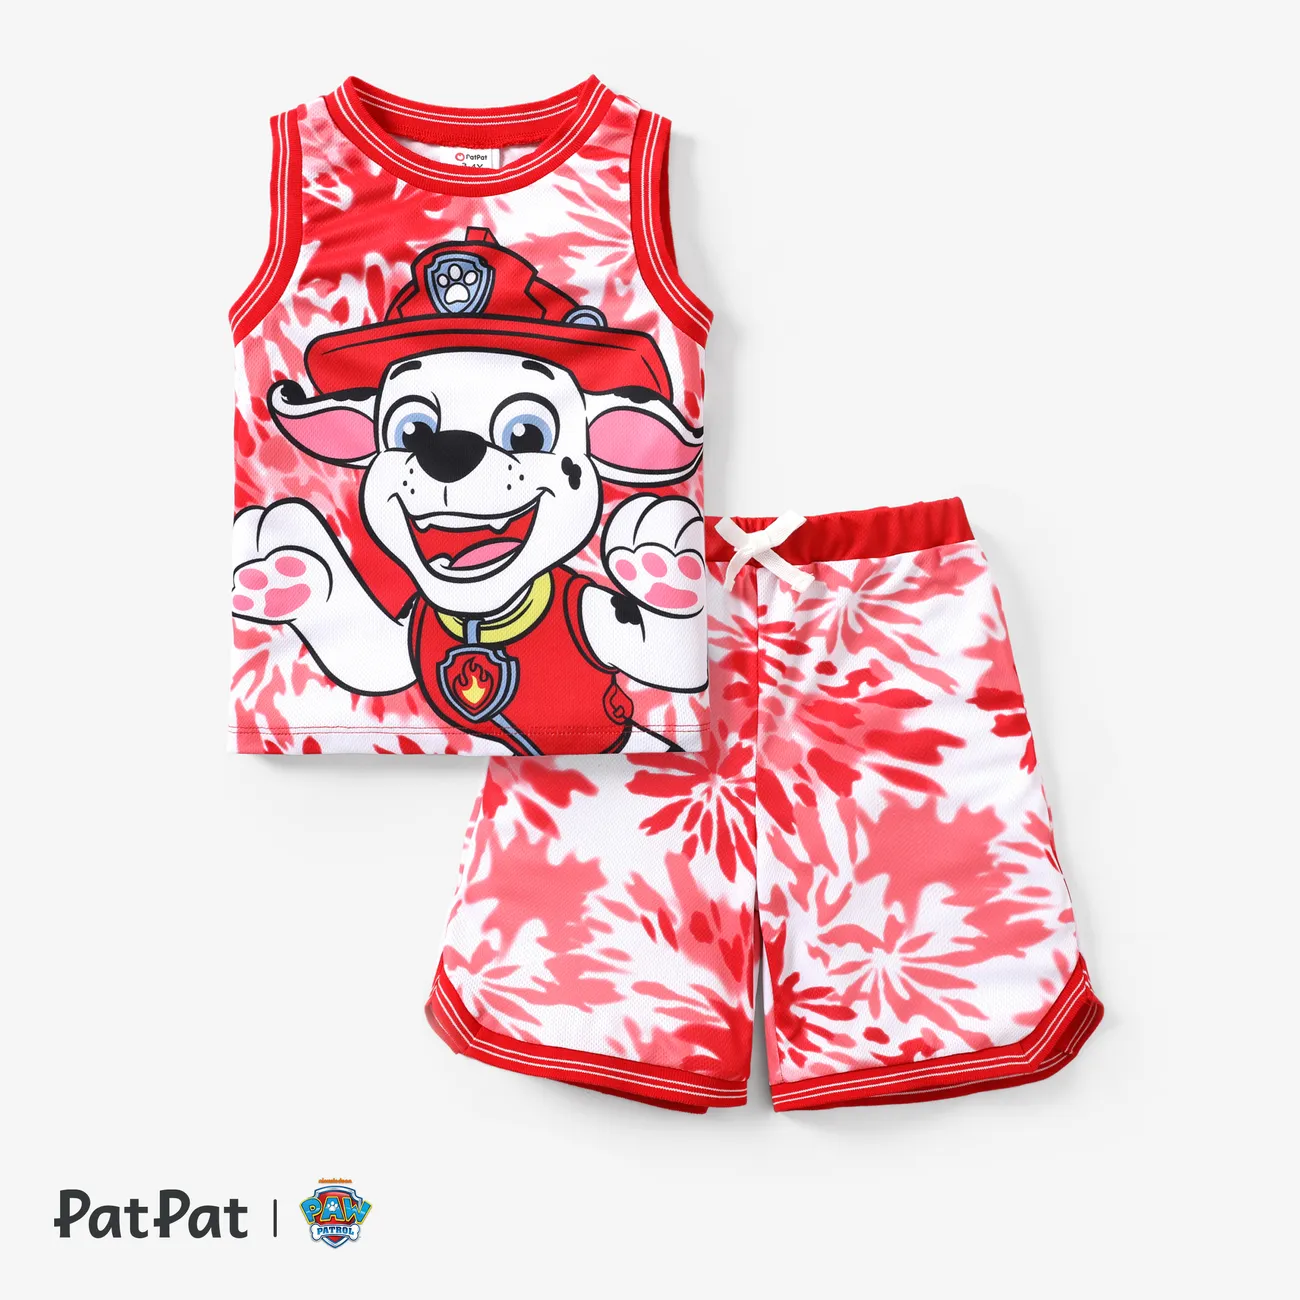 PAW Patrol Boys/Girls Children's Sports and Leisure Tie-Dye Print Effect Flat Machine Webbing Basketball Jersey sets Red big image 1